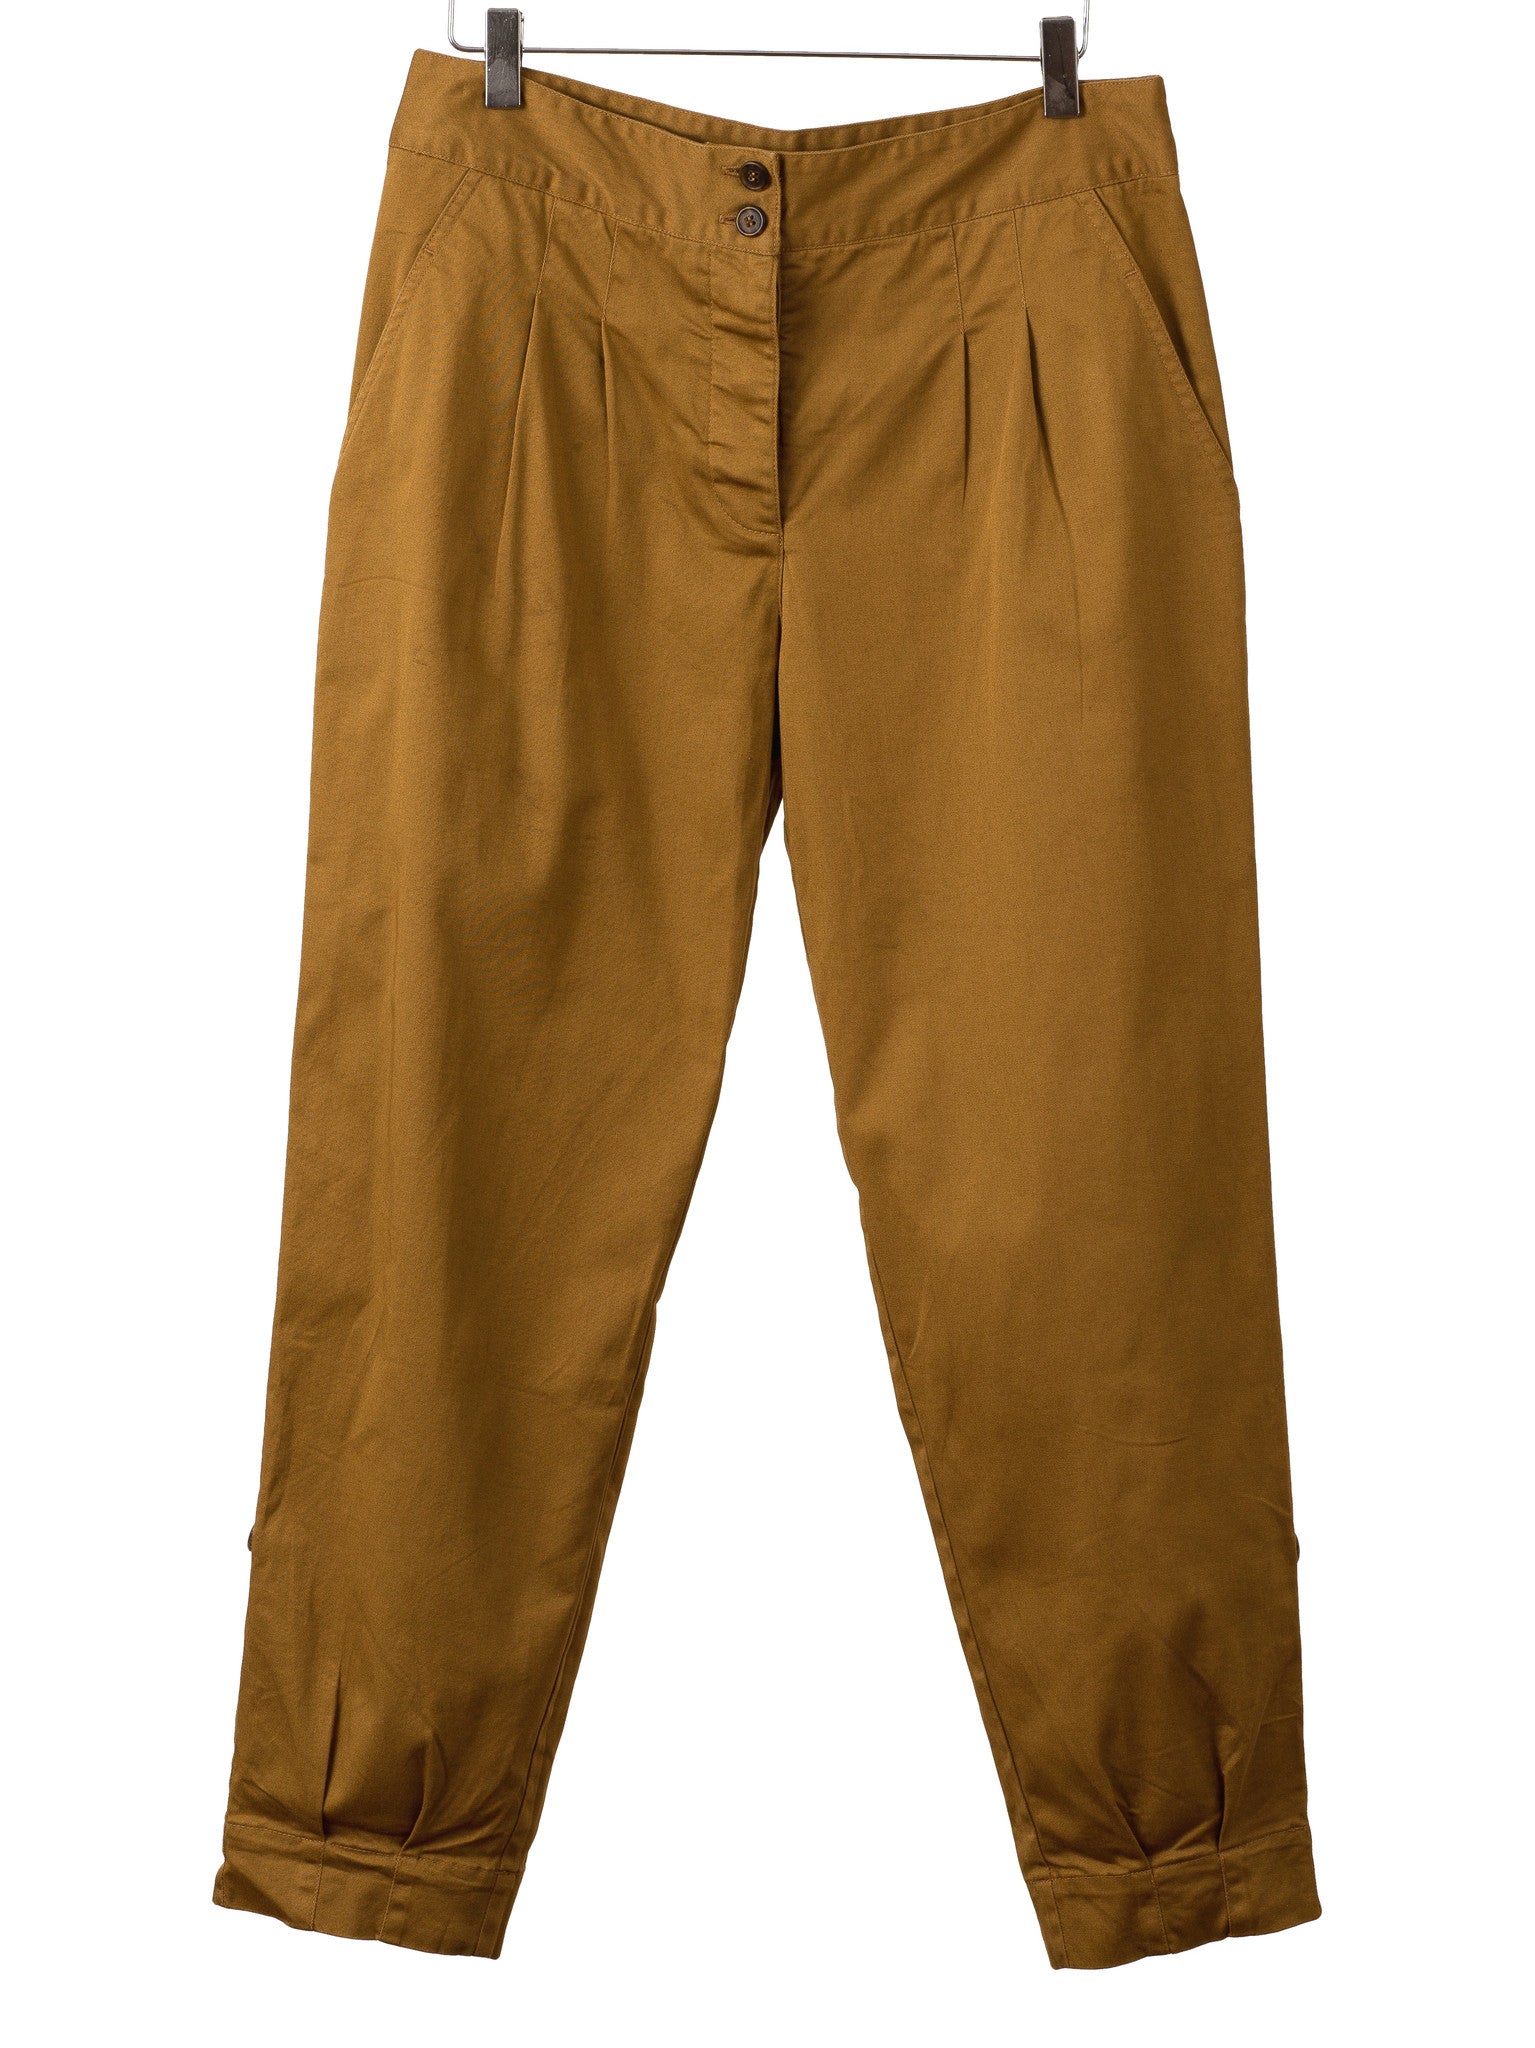 DARK KHAKI PLEAT FRONT PANTS, Trousers, Hickman & Bousfield - Hickman & Bousfield, Safari and Travel Clothing